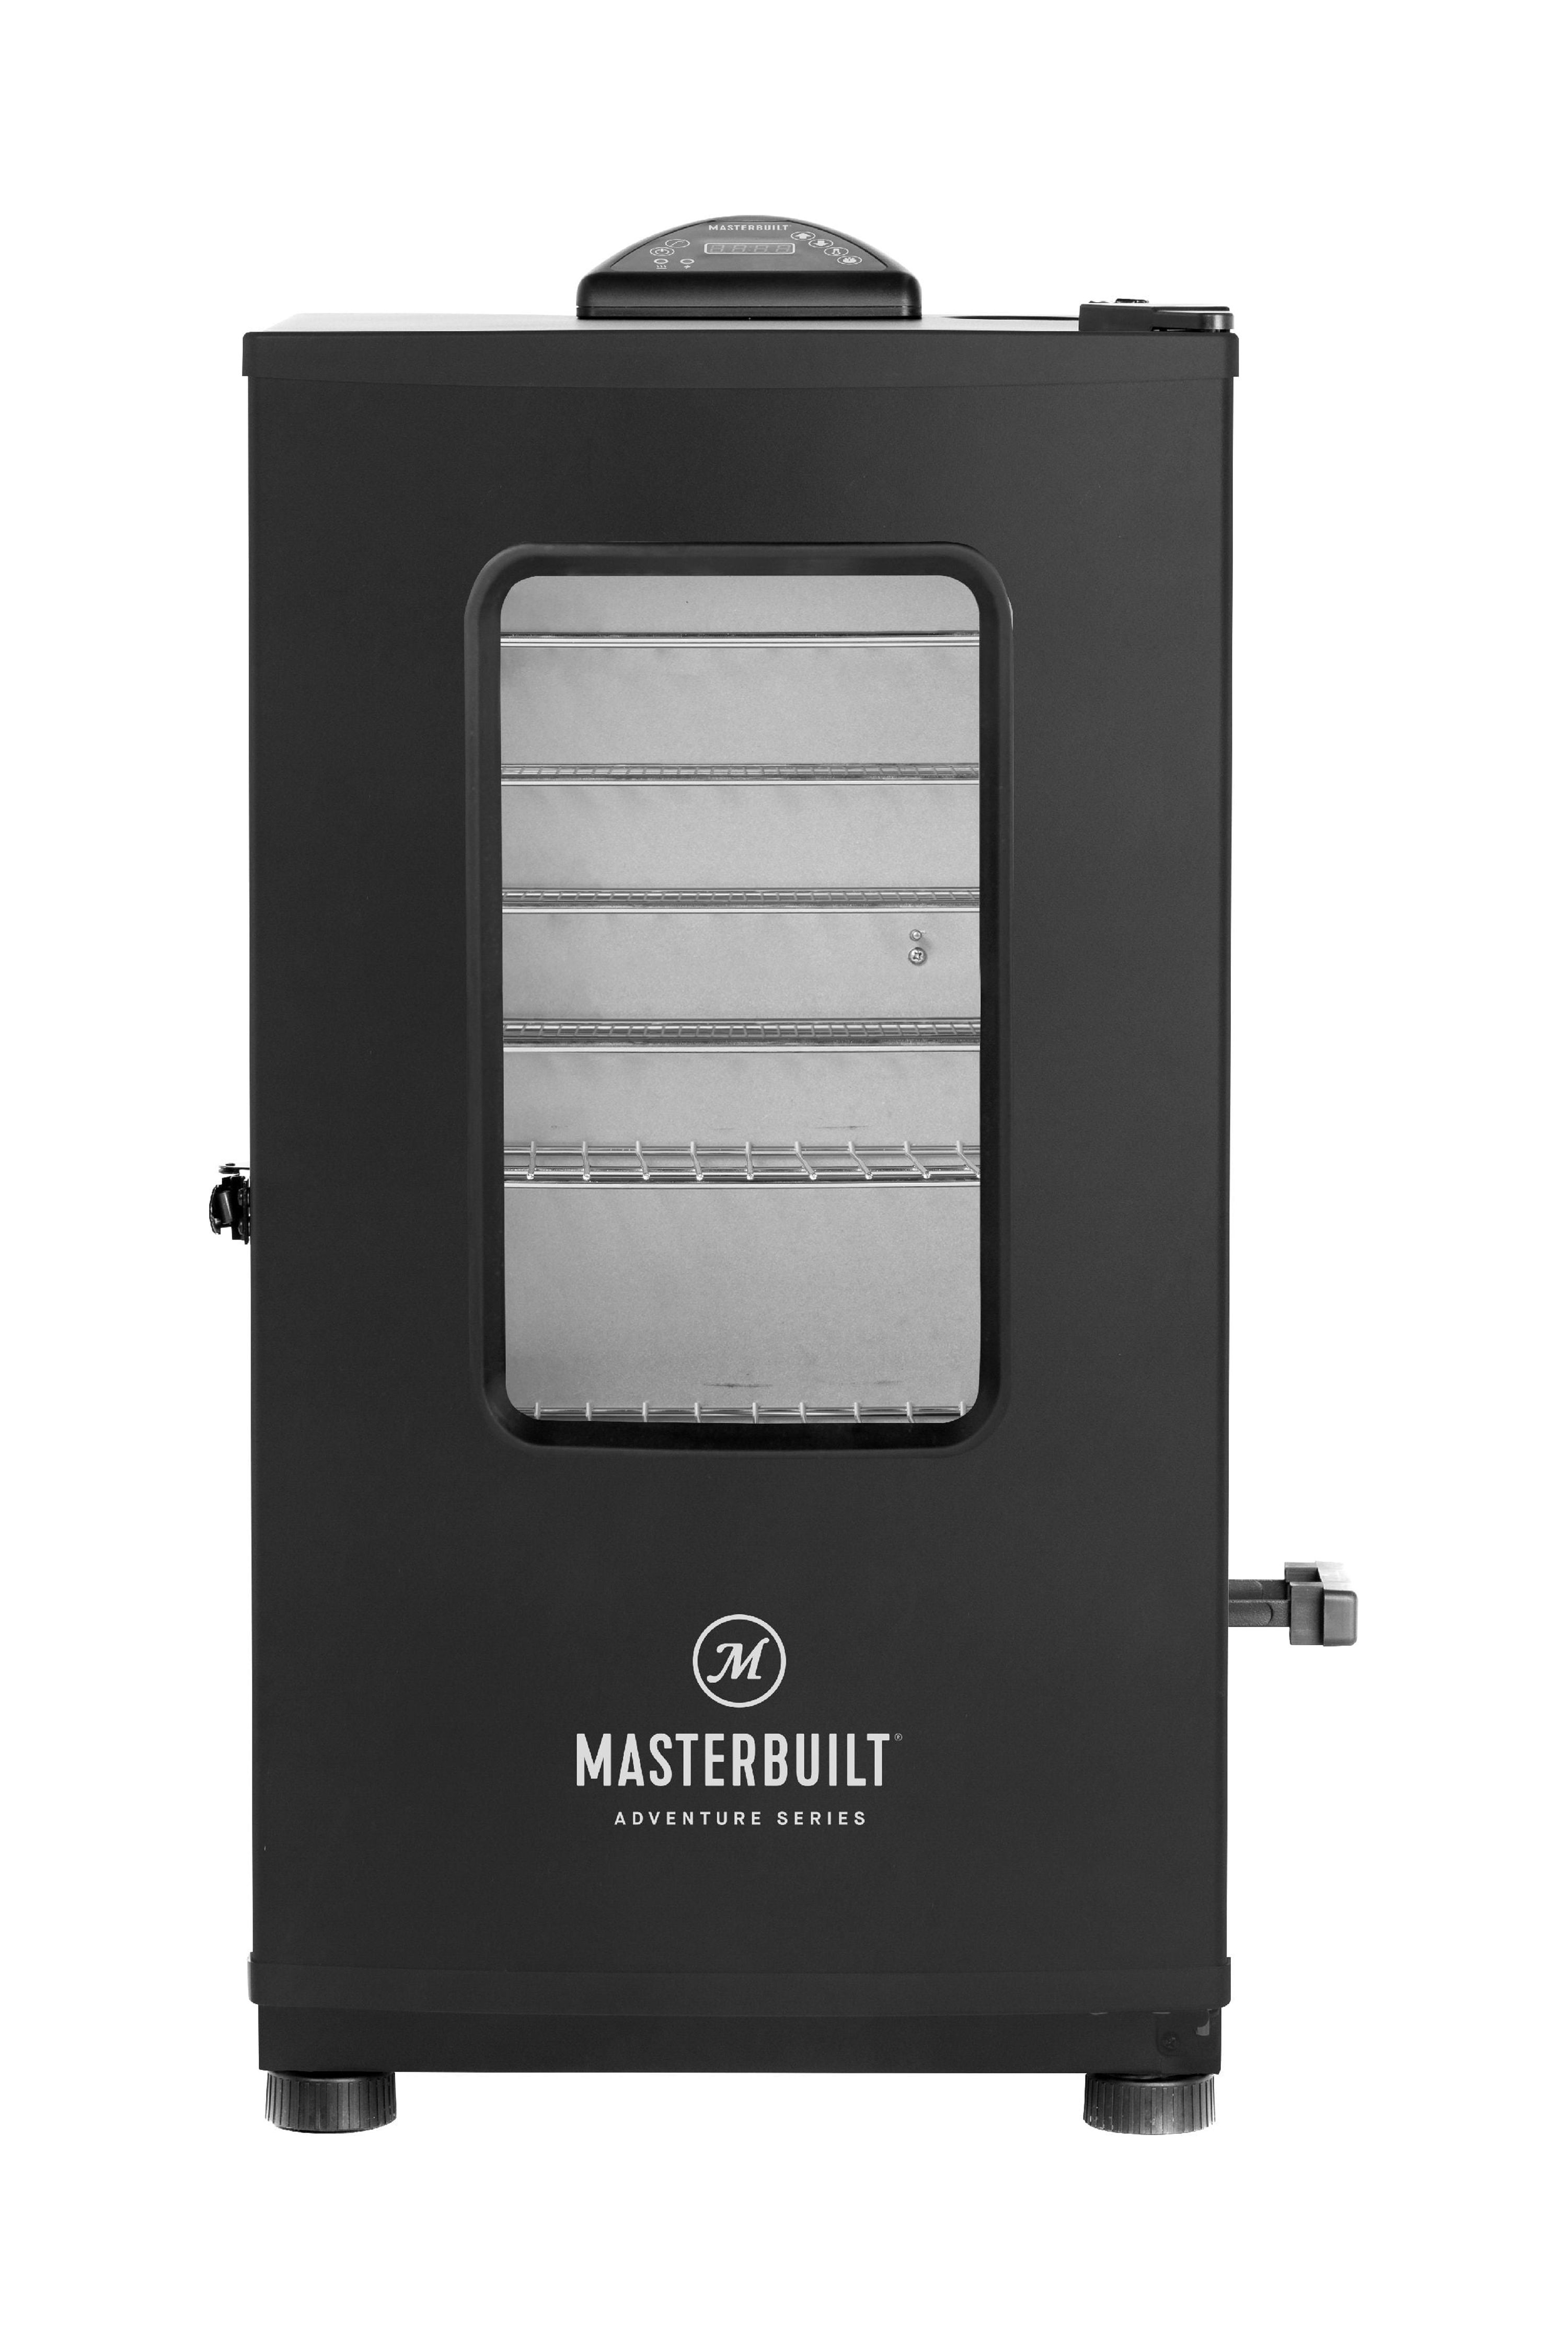 Masterbuilt Adventure Series MES 130S Electric Smoker - image 1 of 4